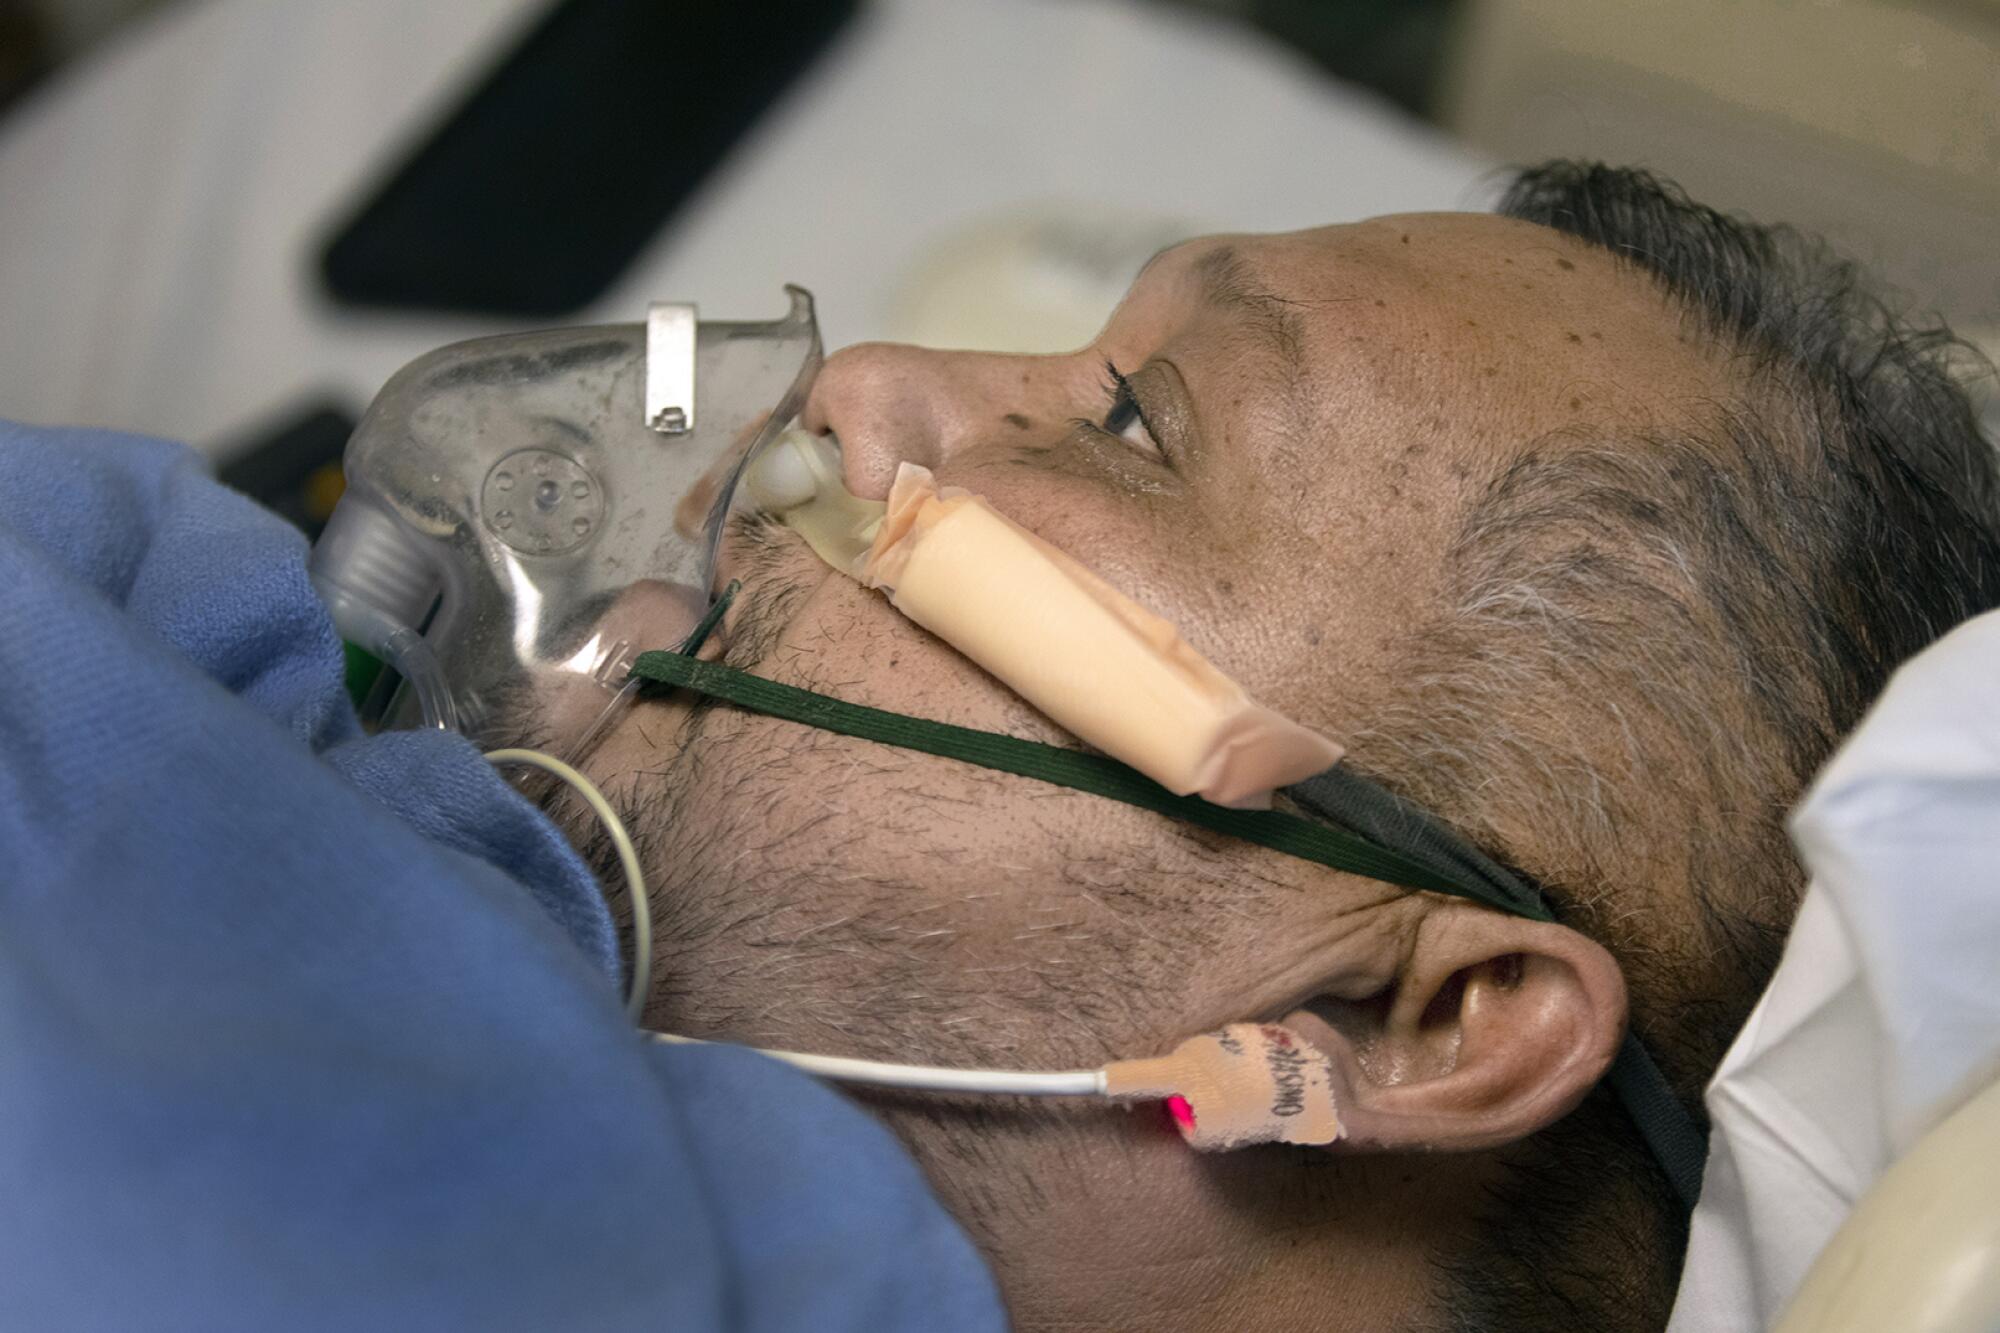 Mariano Zuñiga-Anaya, 57, at the hospital